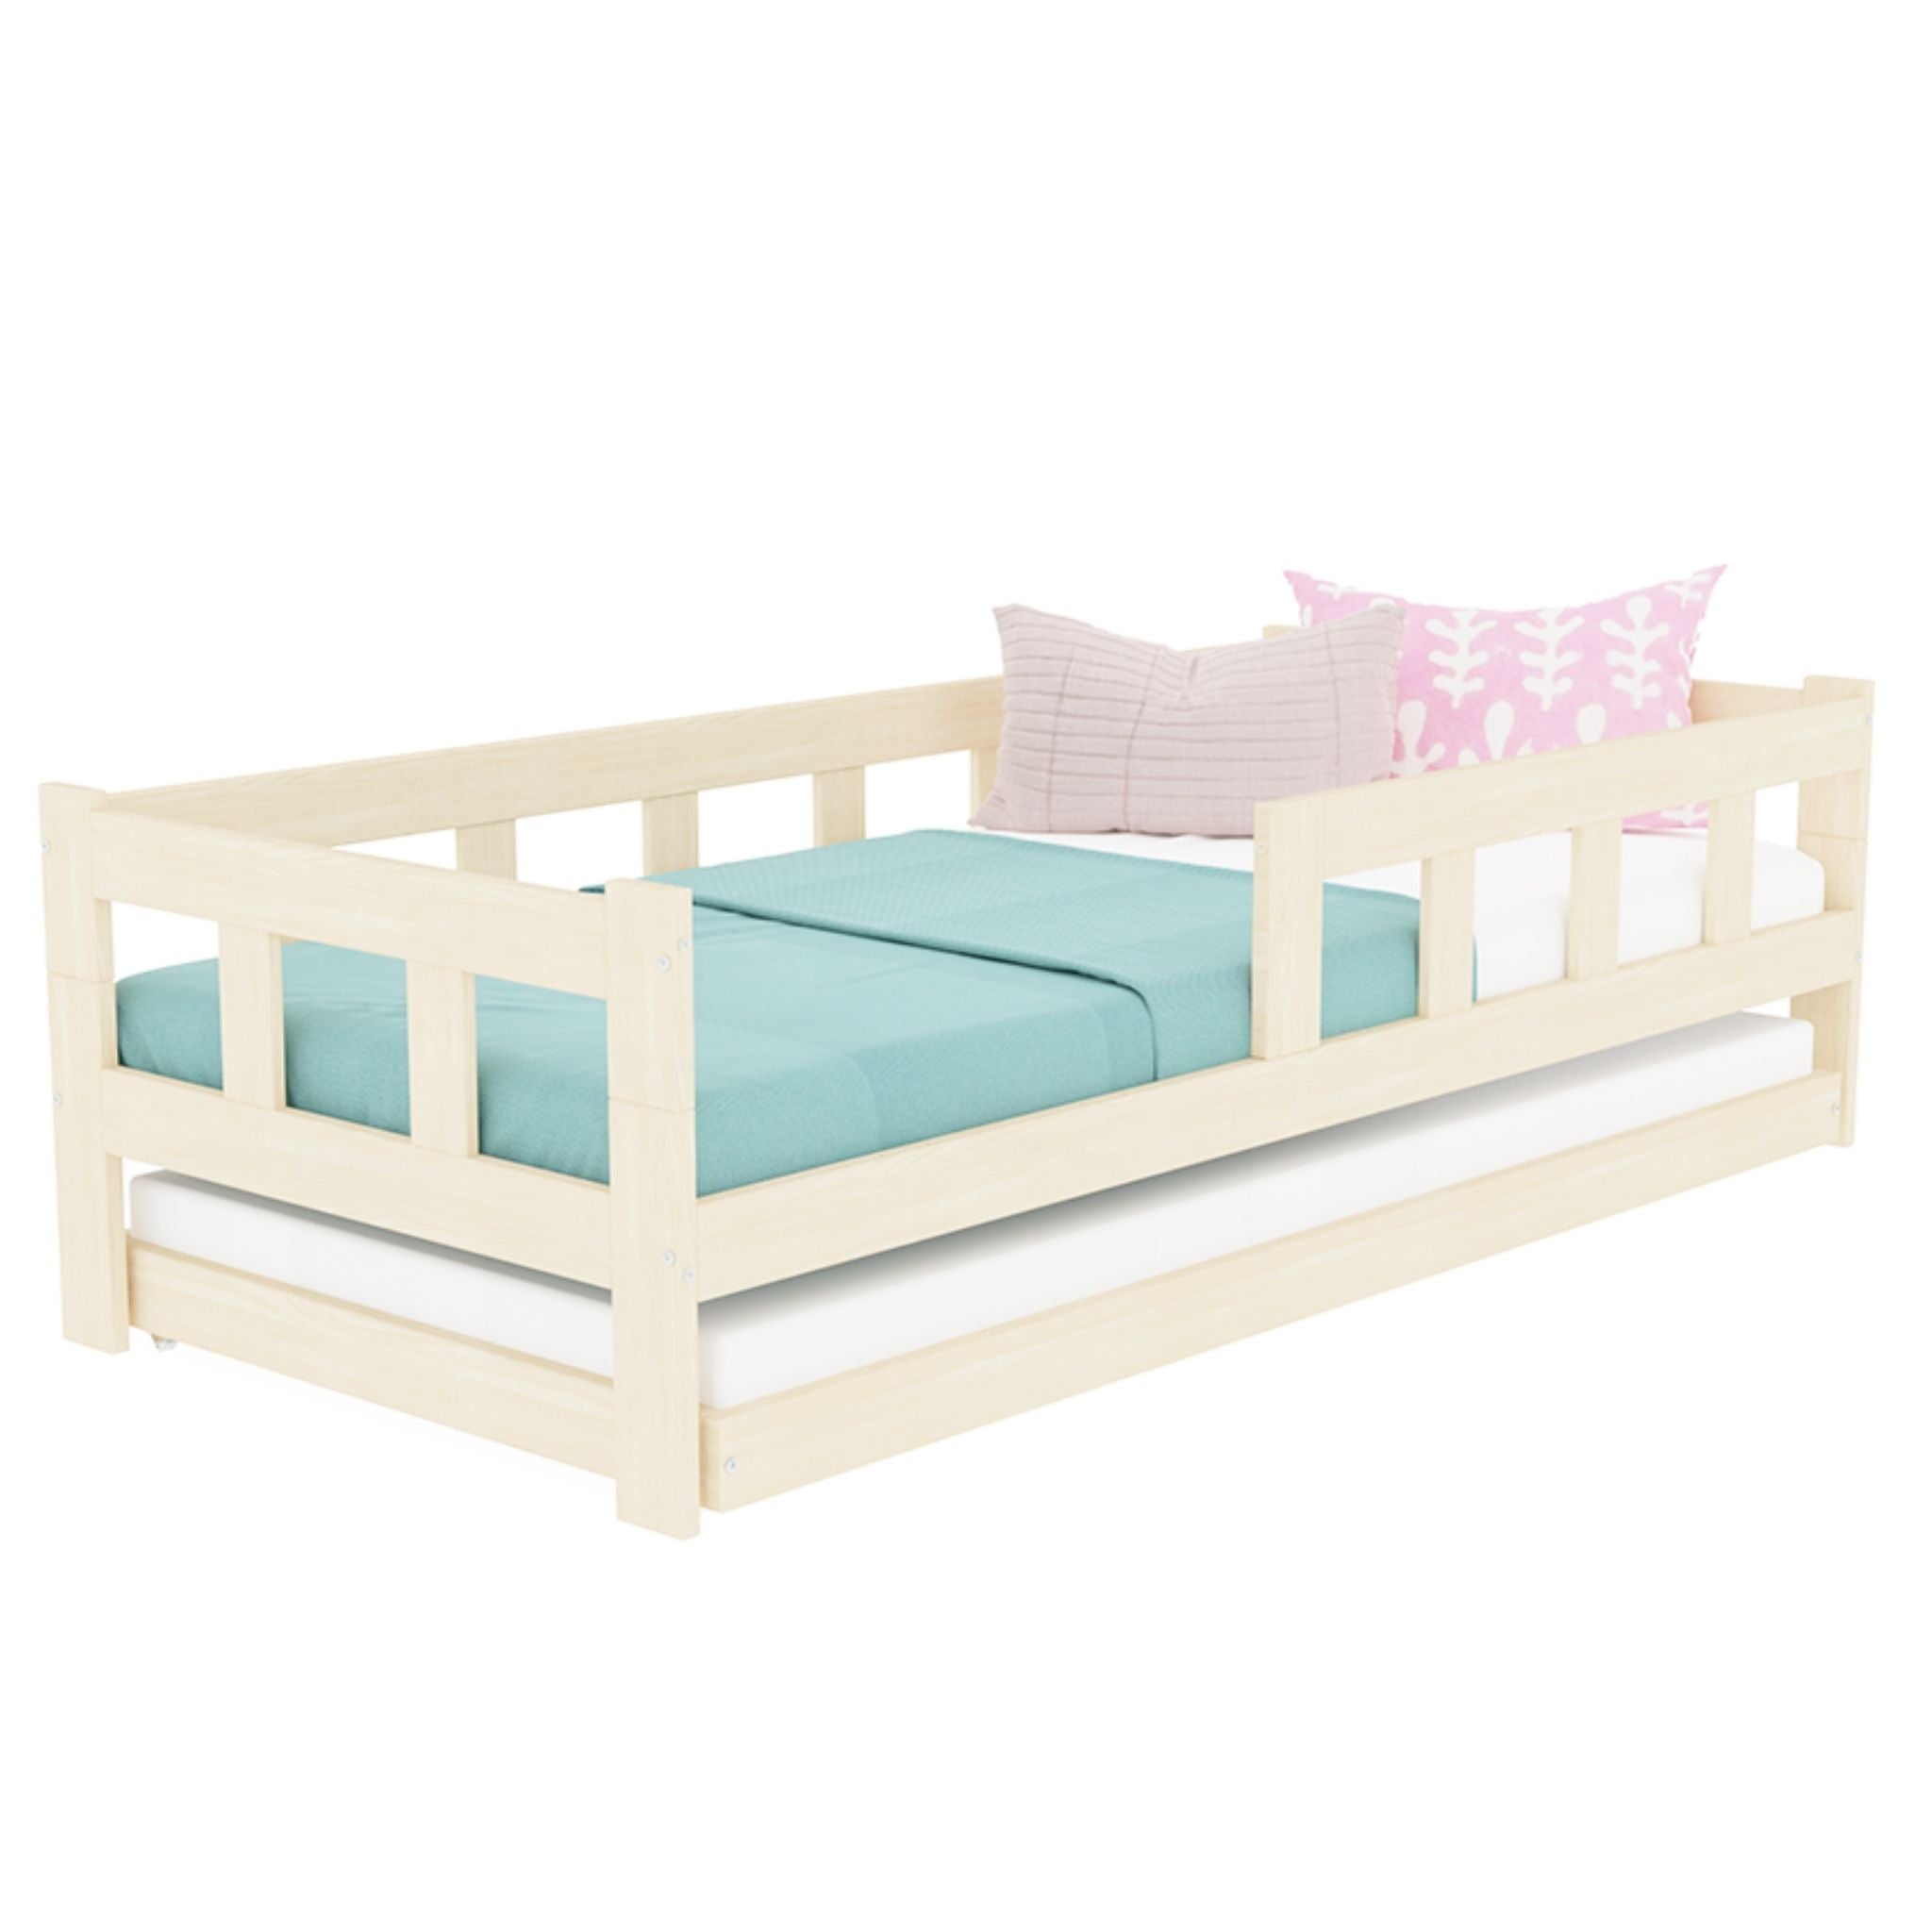 Essential Comfort Wooden Children's Bed FENCE - Natural